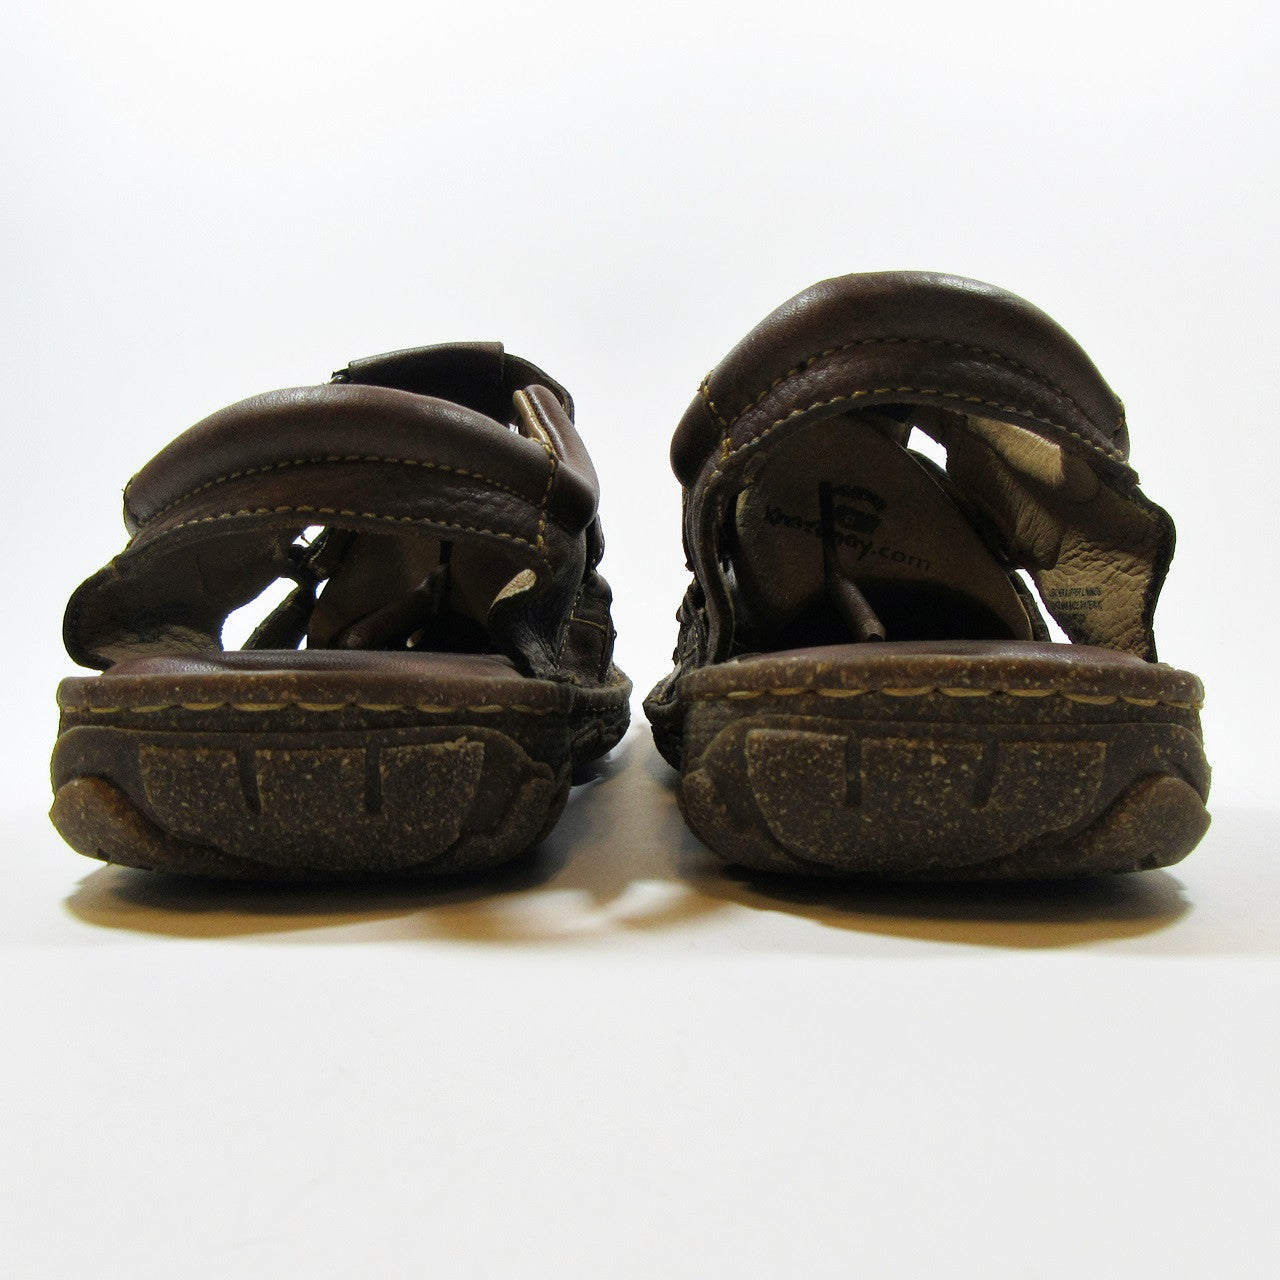 BORN Leather Sandal - Khazanay